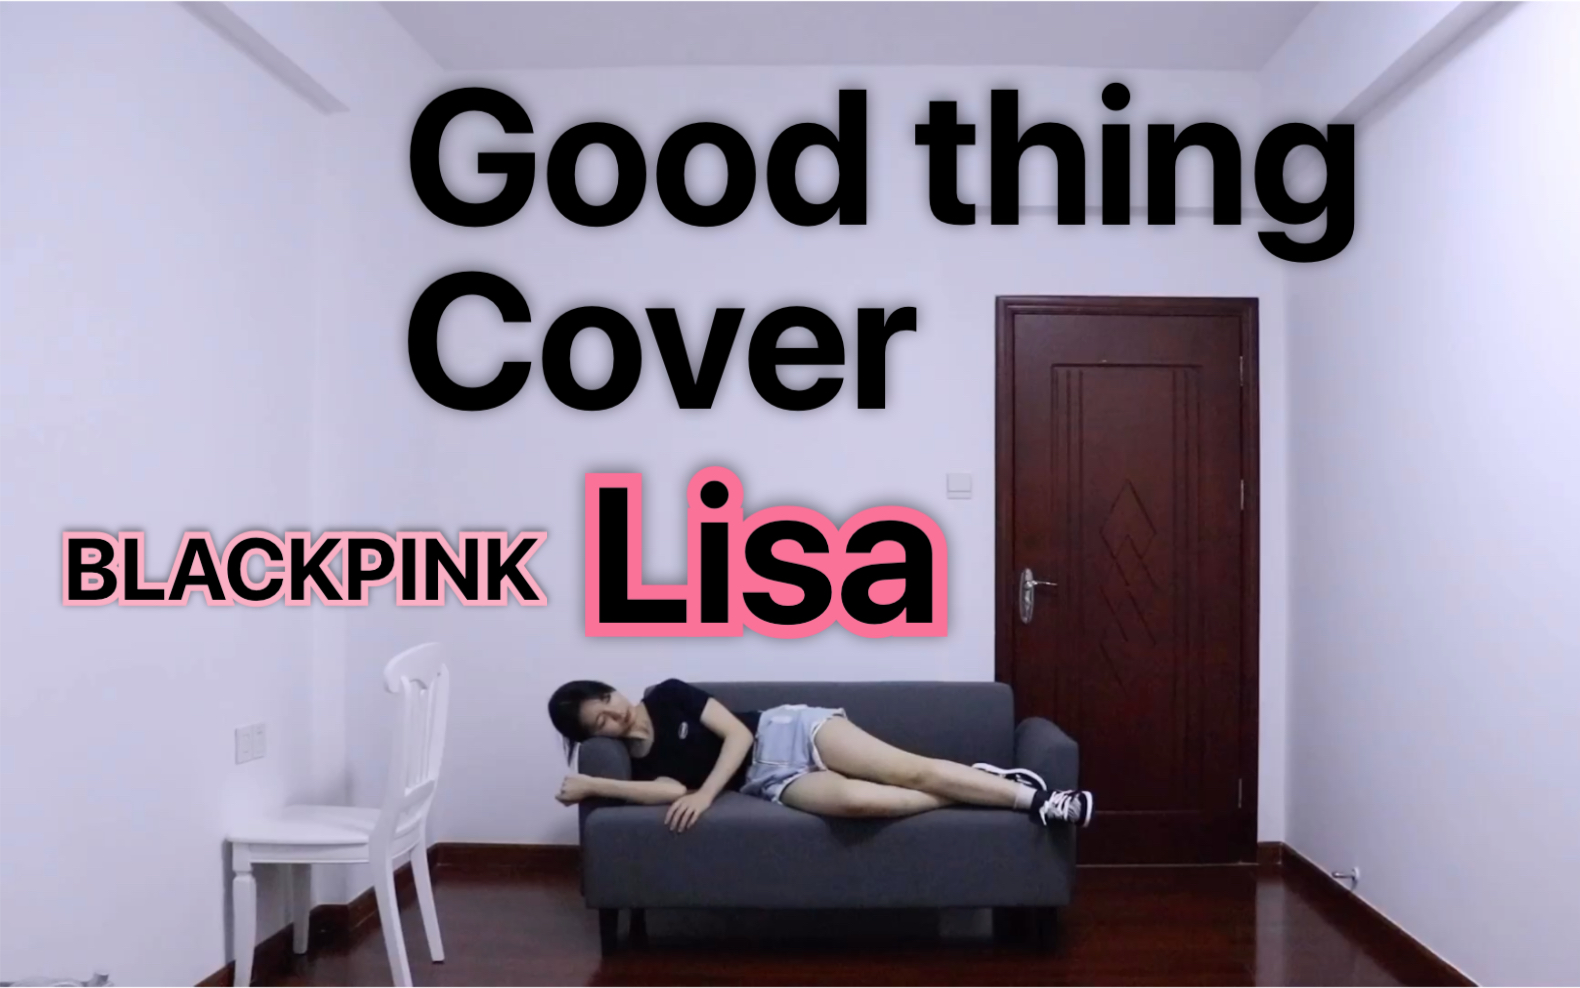 Lisa good thing 翻跳｜BLACKPINK演唱会单品｜表情管理大型崩坏现场｜楼下住户每日投诉的砸地板舞。